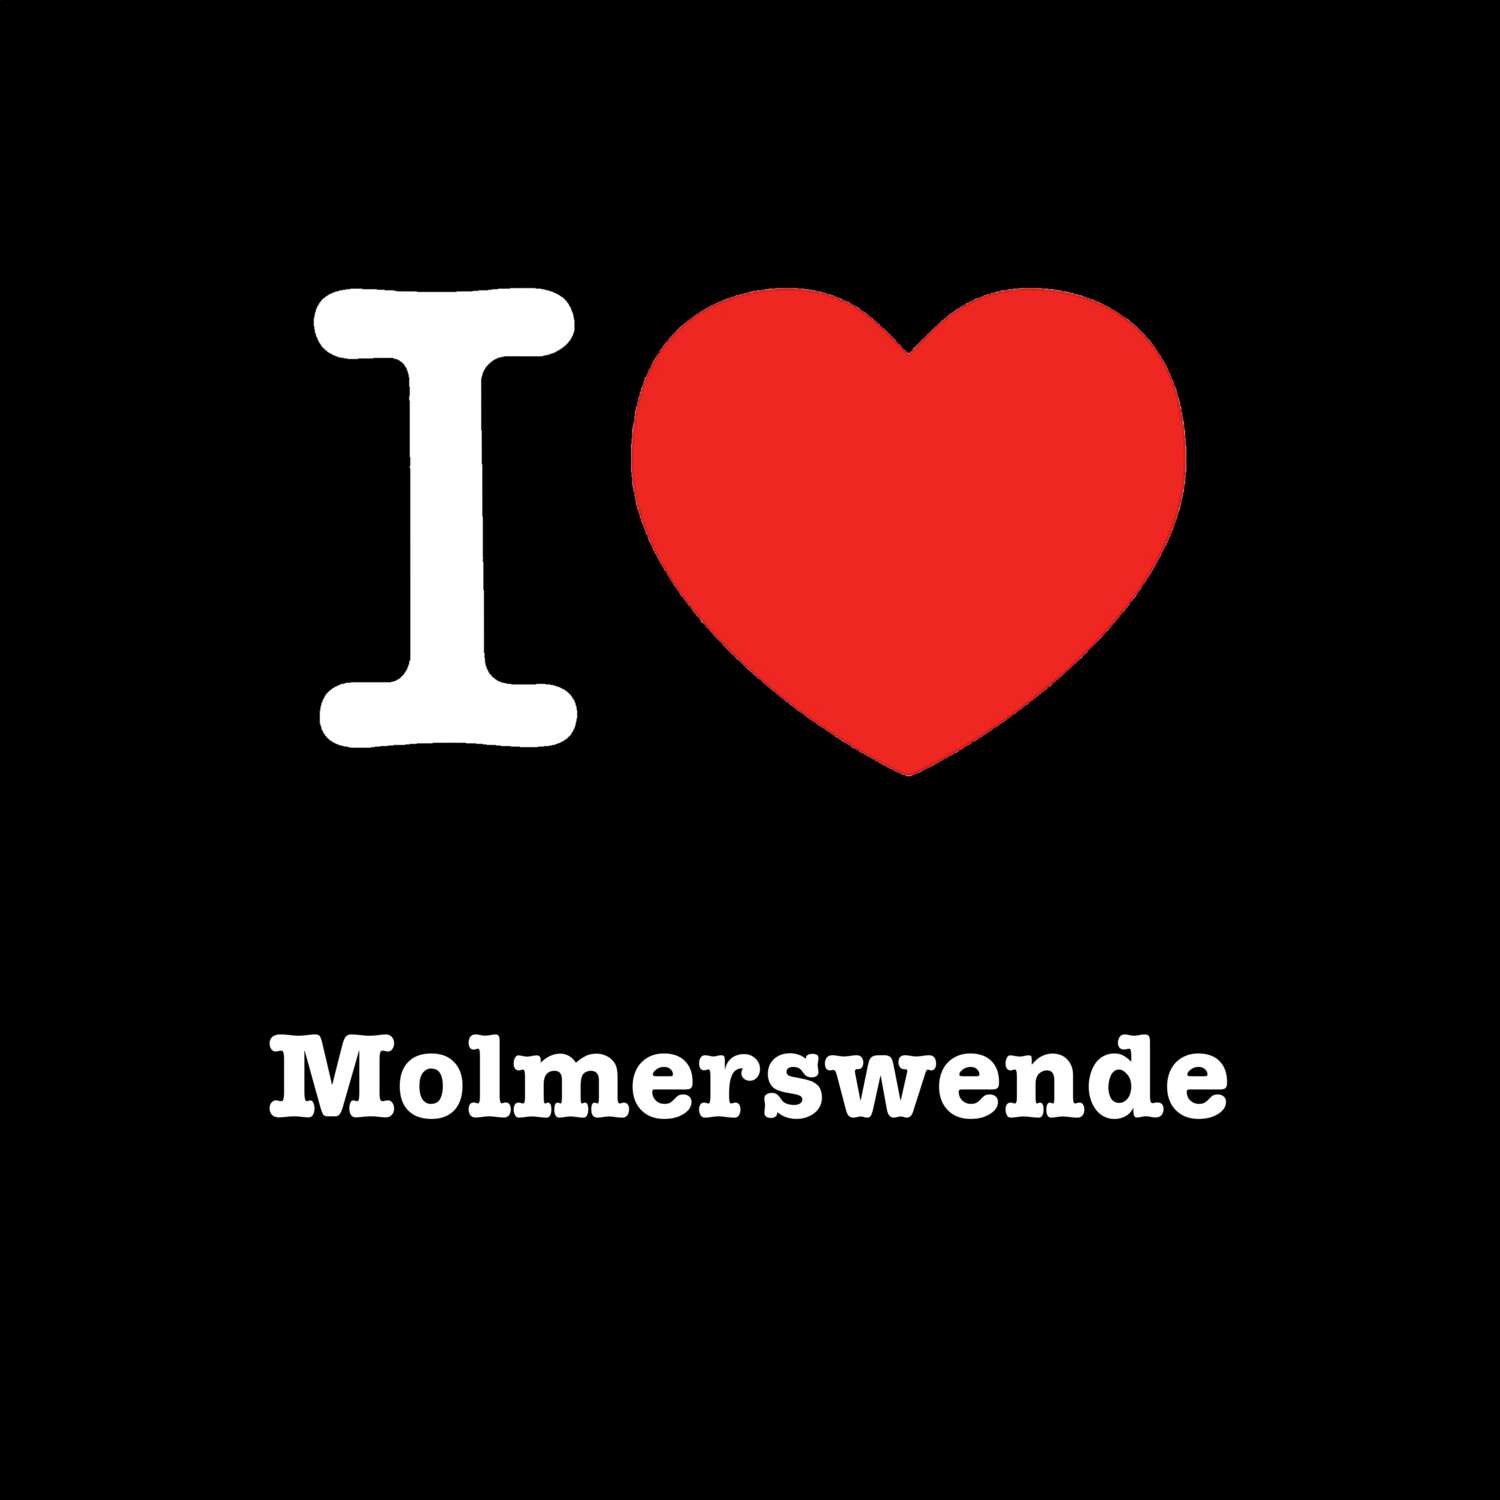 Molmerswende T-Shirt »I love«